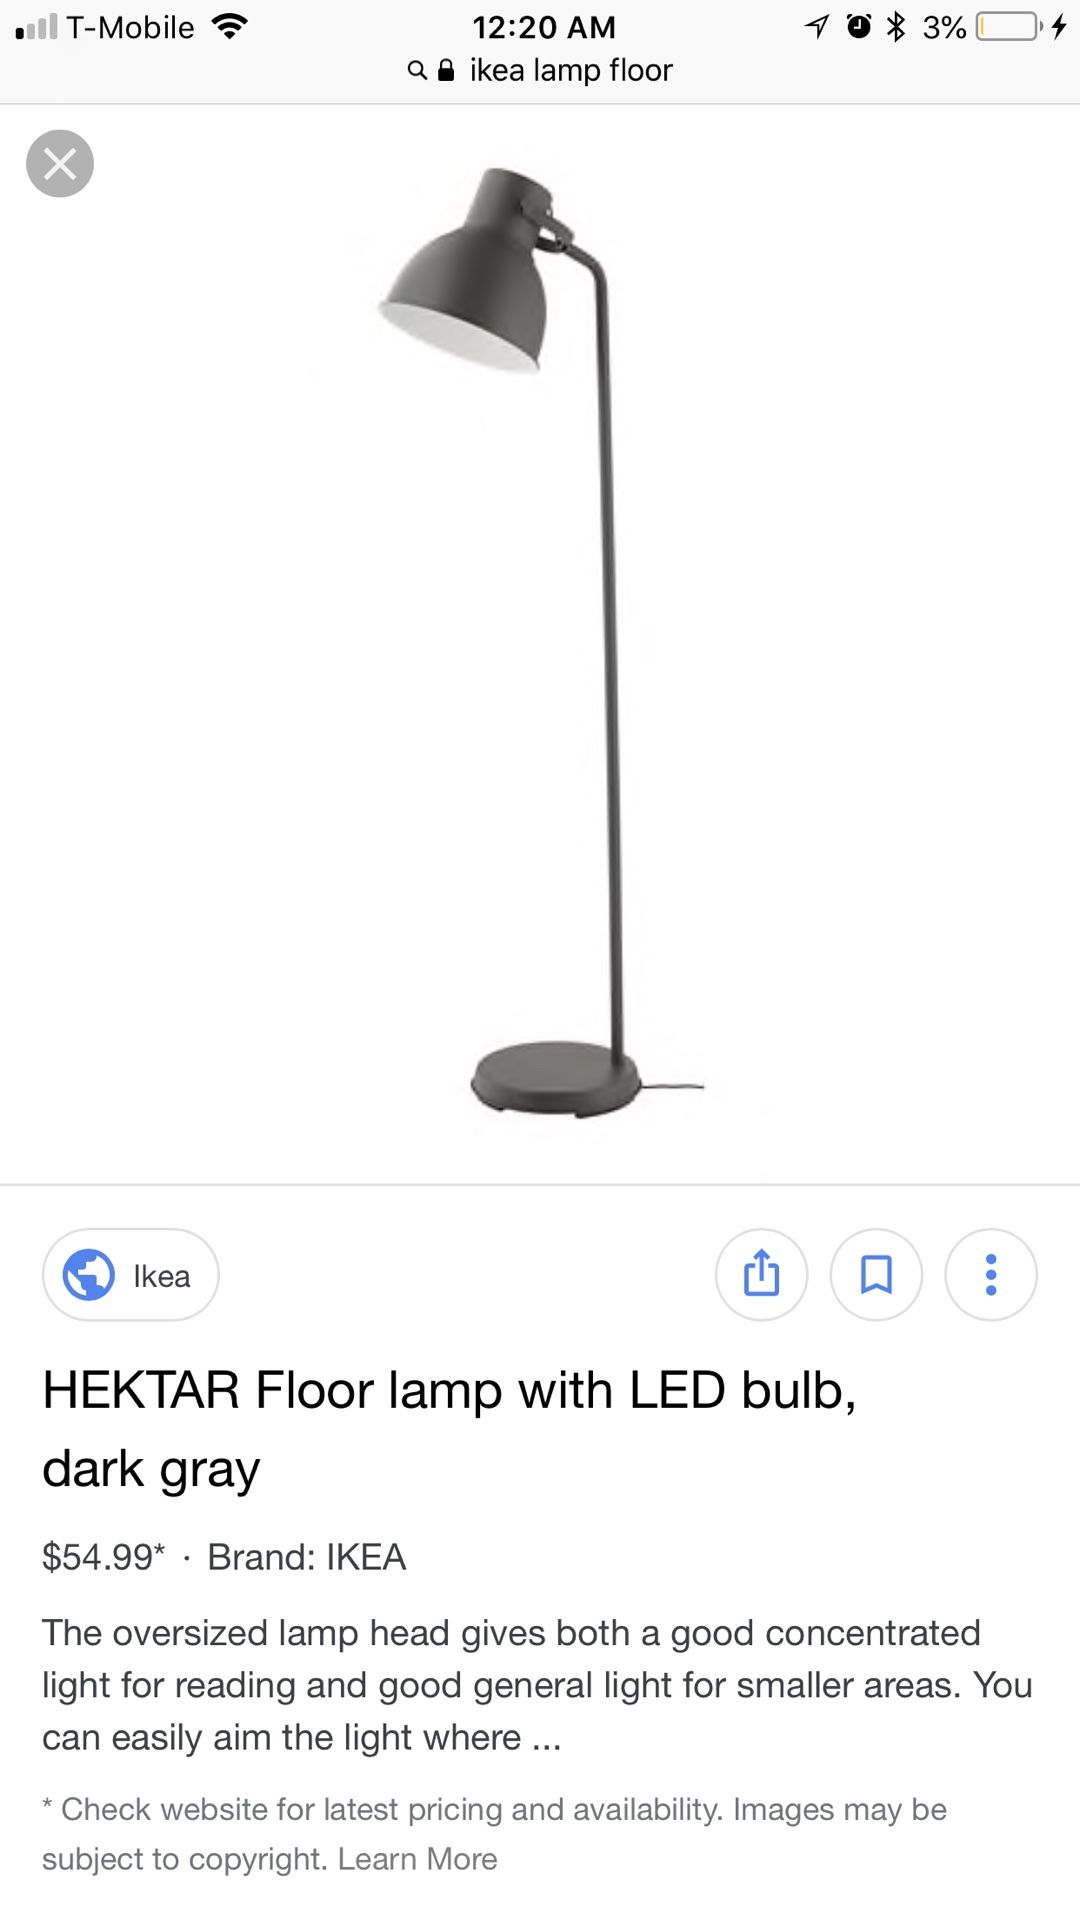 Hektar floor lamp